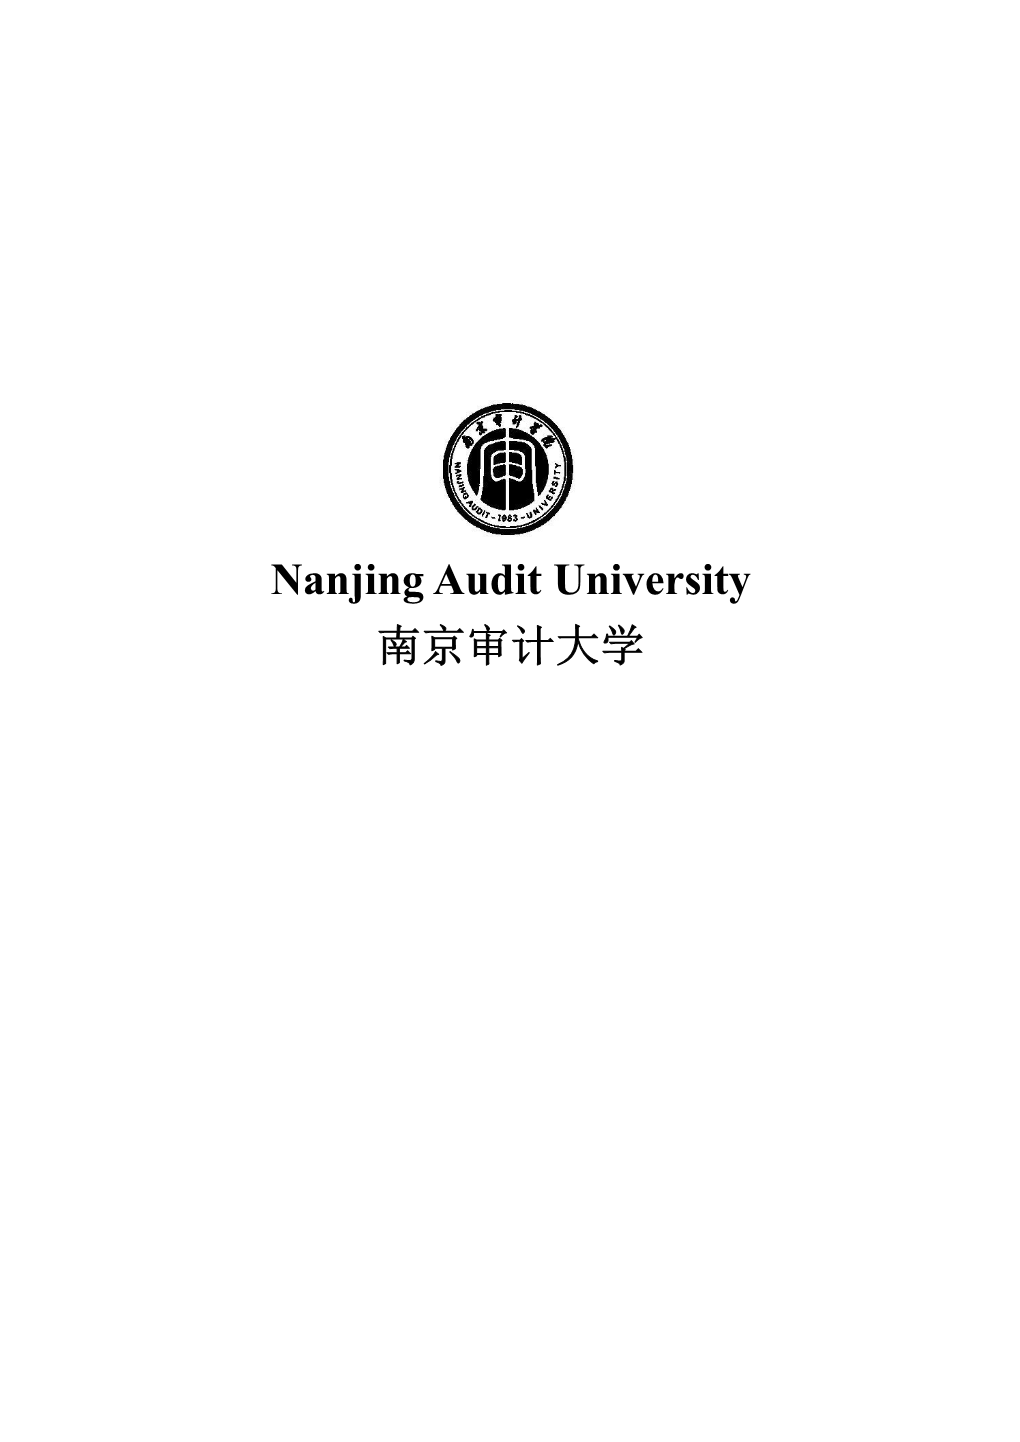 Nanjing Audit University 南京审计大学 Nanjing Audit University